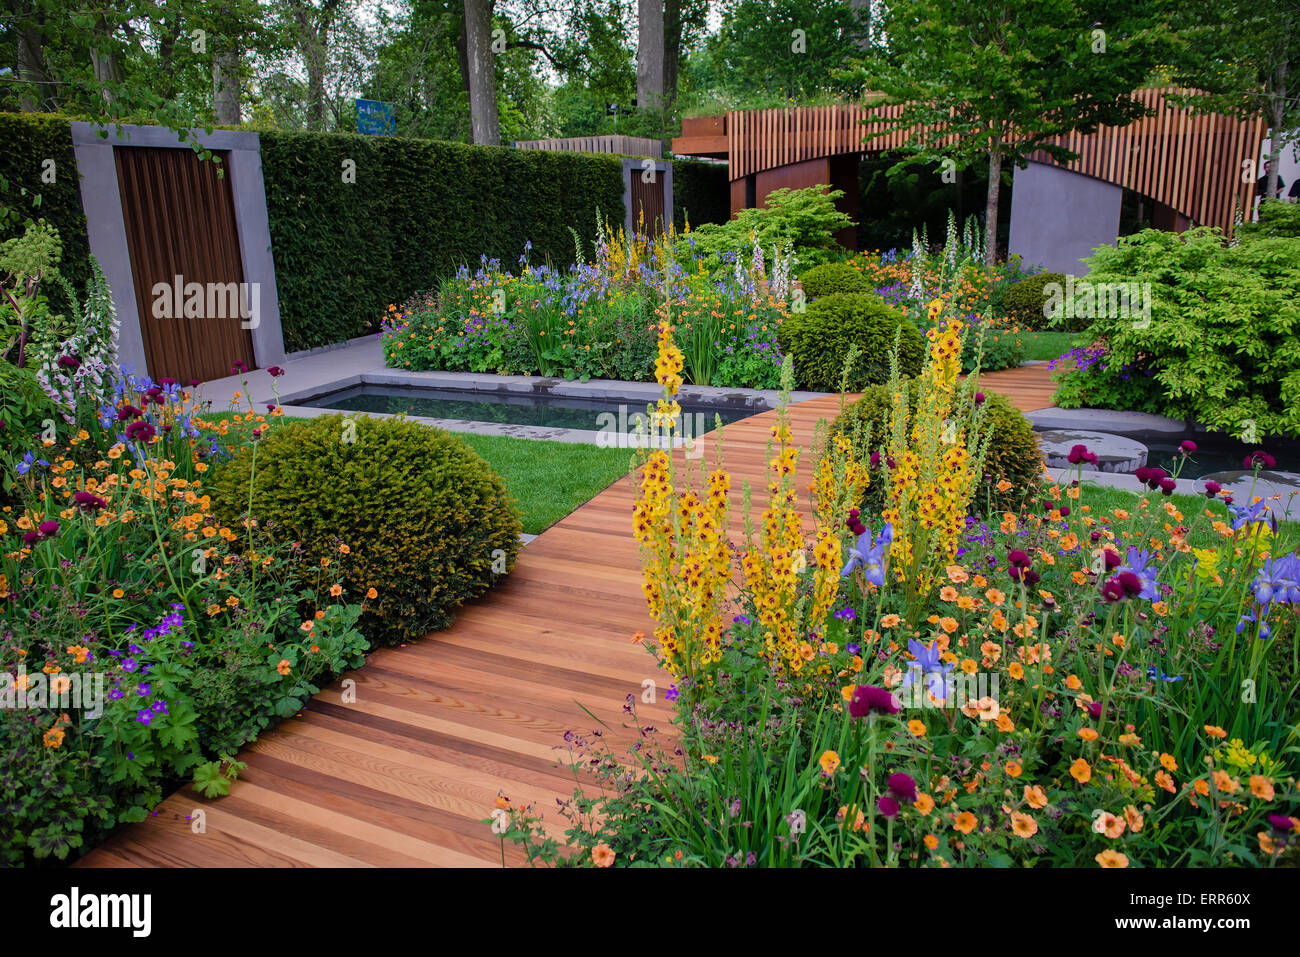 L'Homebase Garden - Urban Retreat par Adam Frost, gold award, Chelsea Flower Show 2015 Banque D'Images